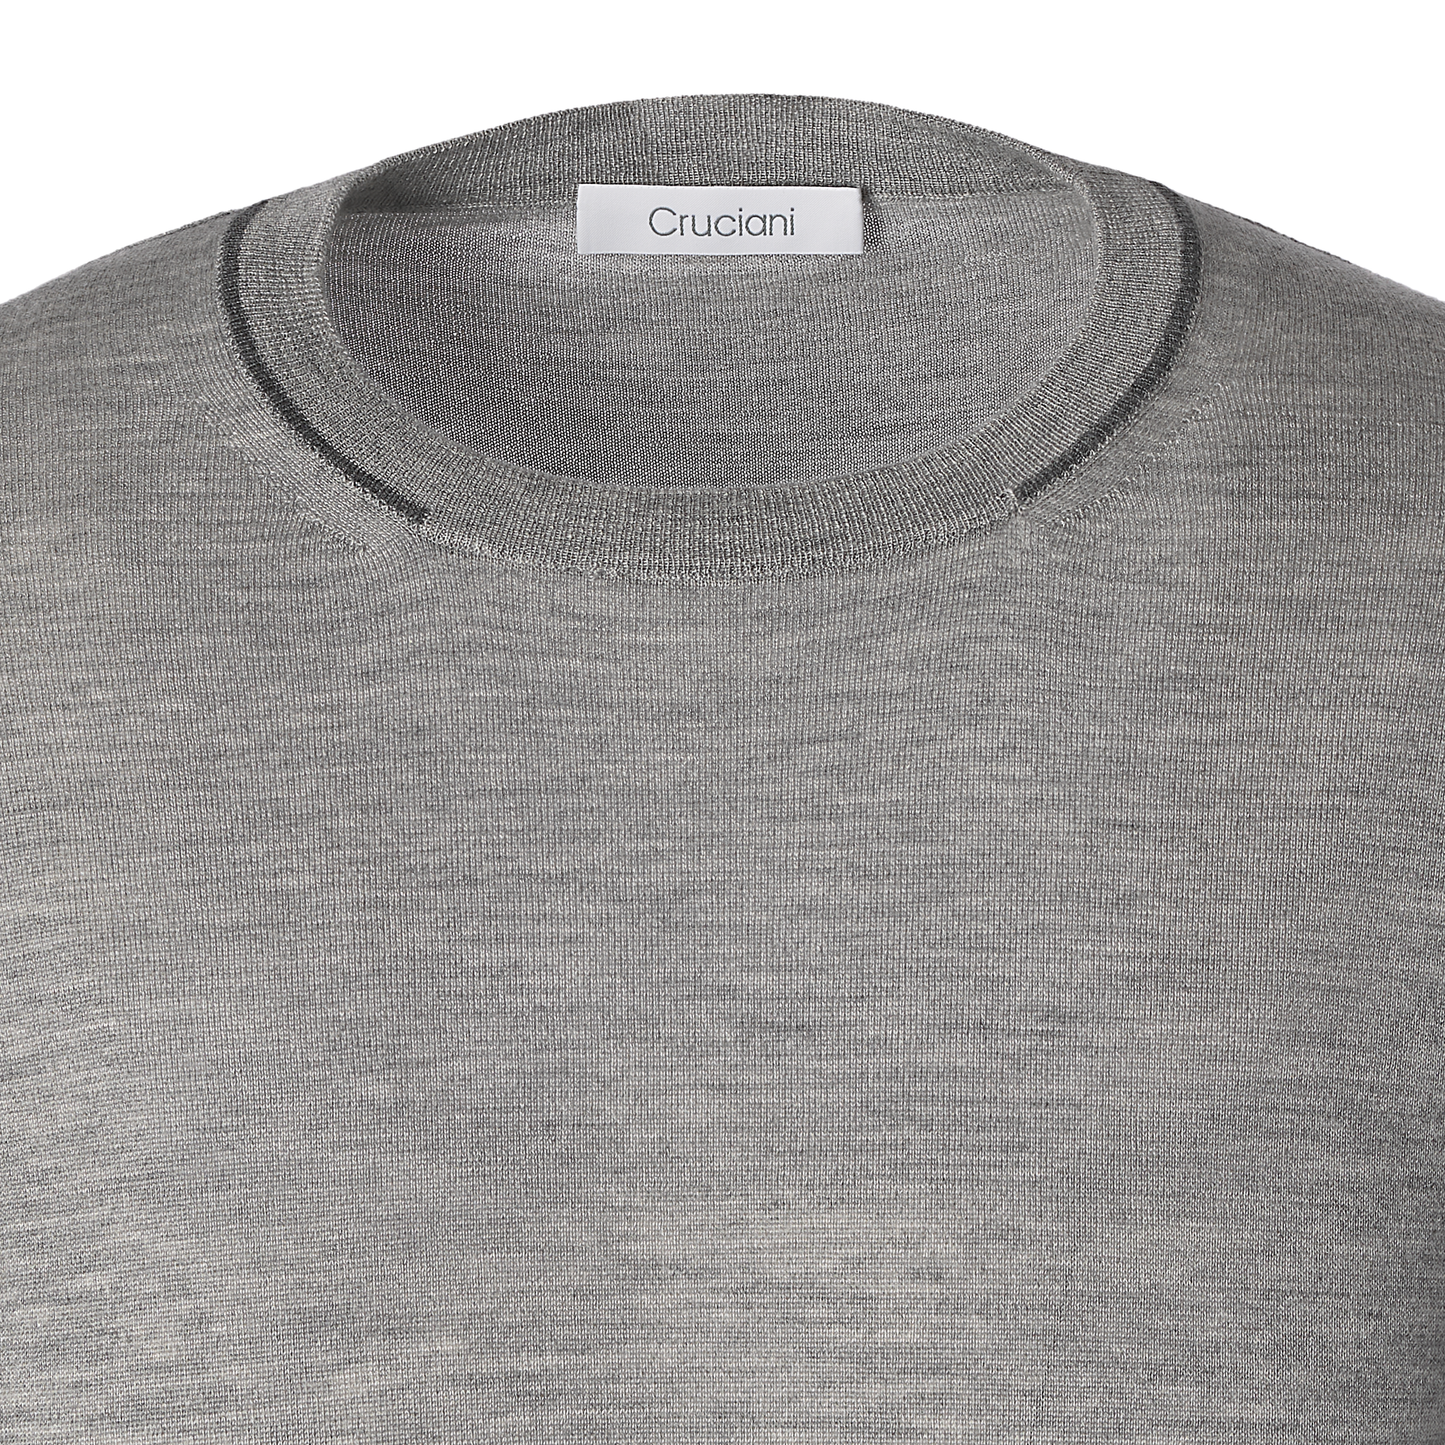 Cruciani Crew-Neck Cashmere and Silk-Blend Sweater in Light Grey - SARTALE